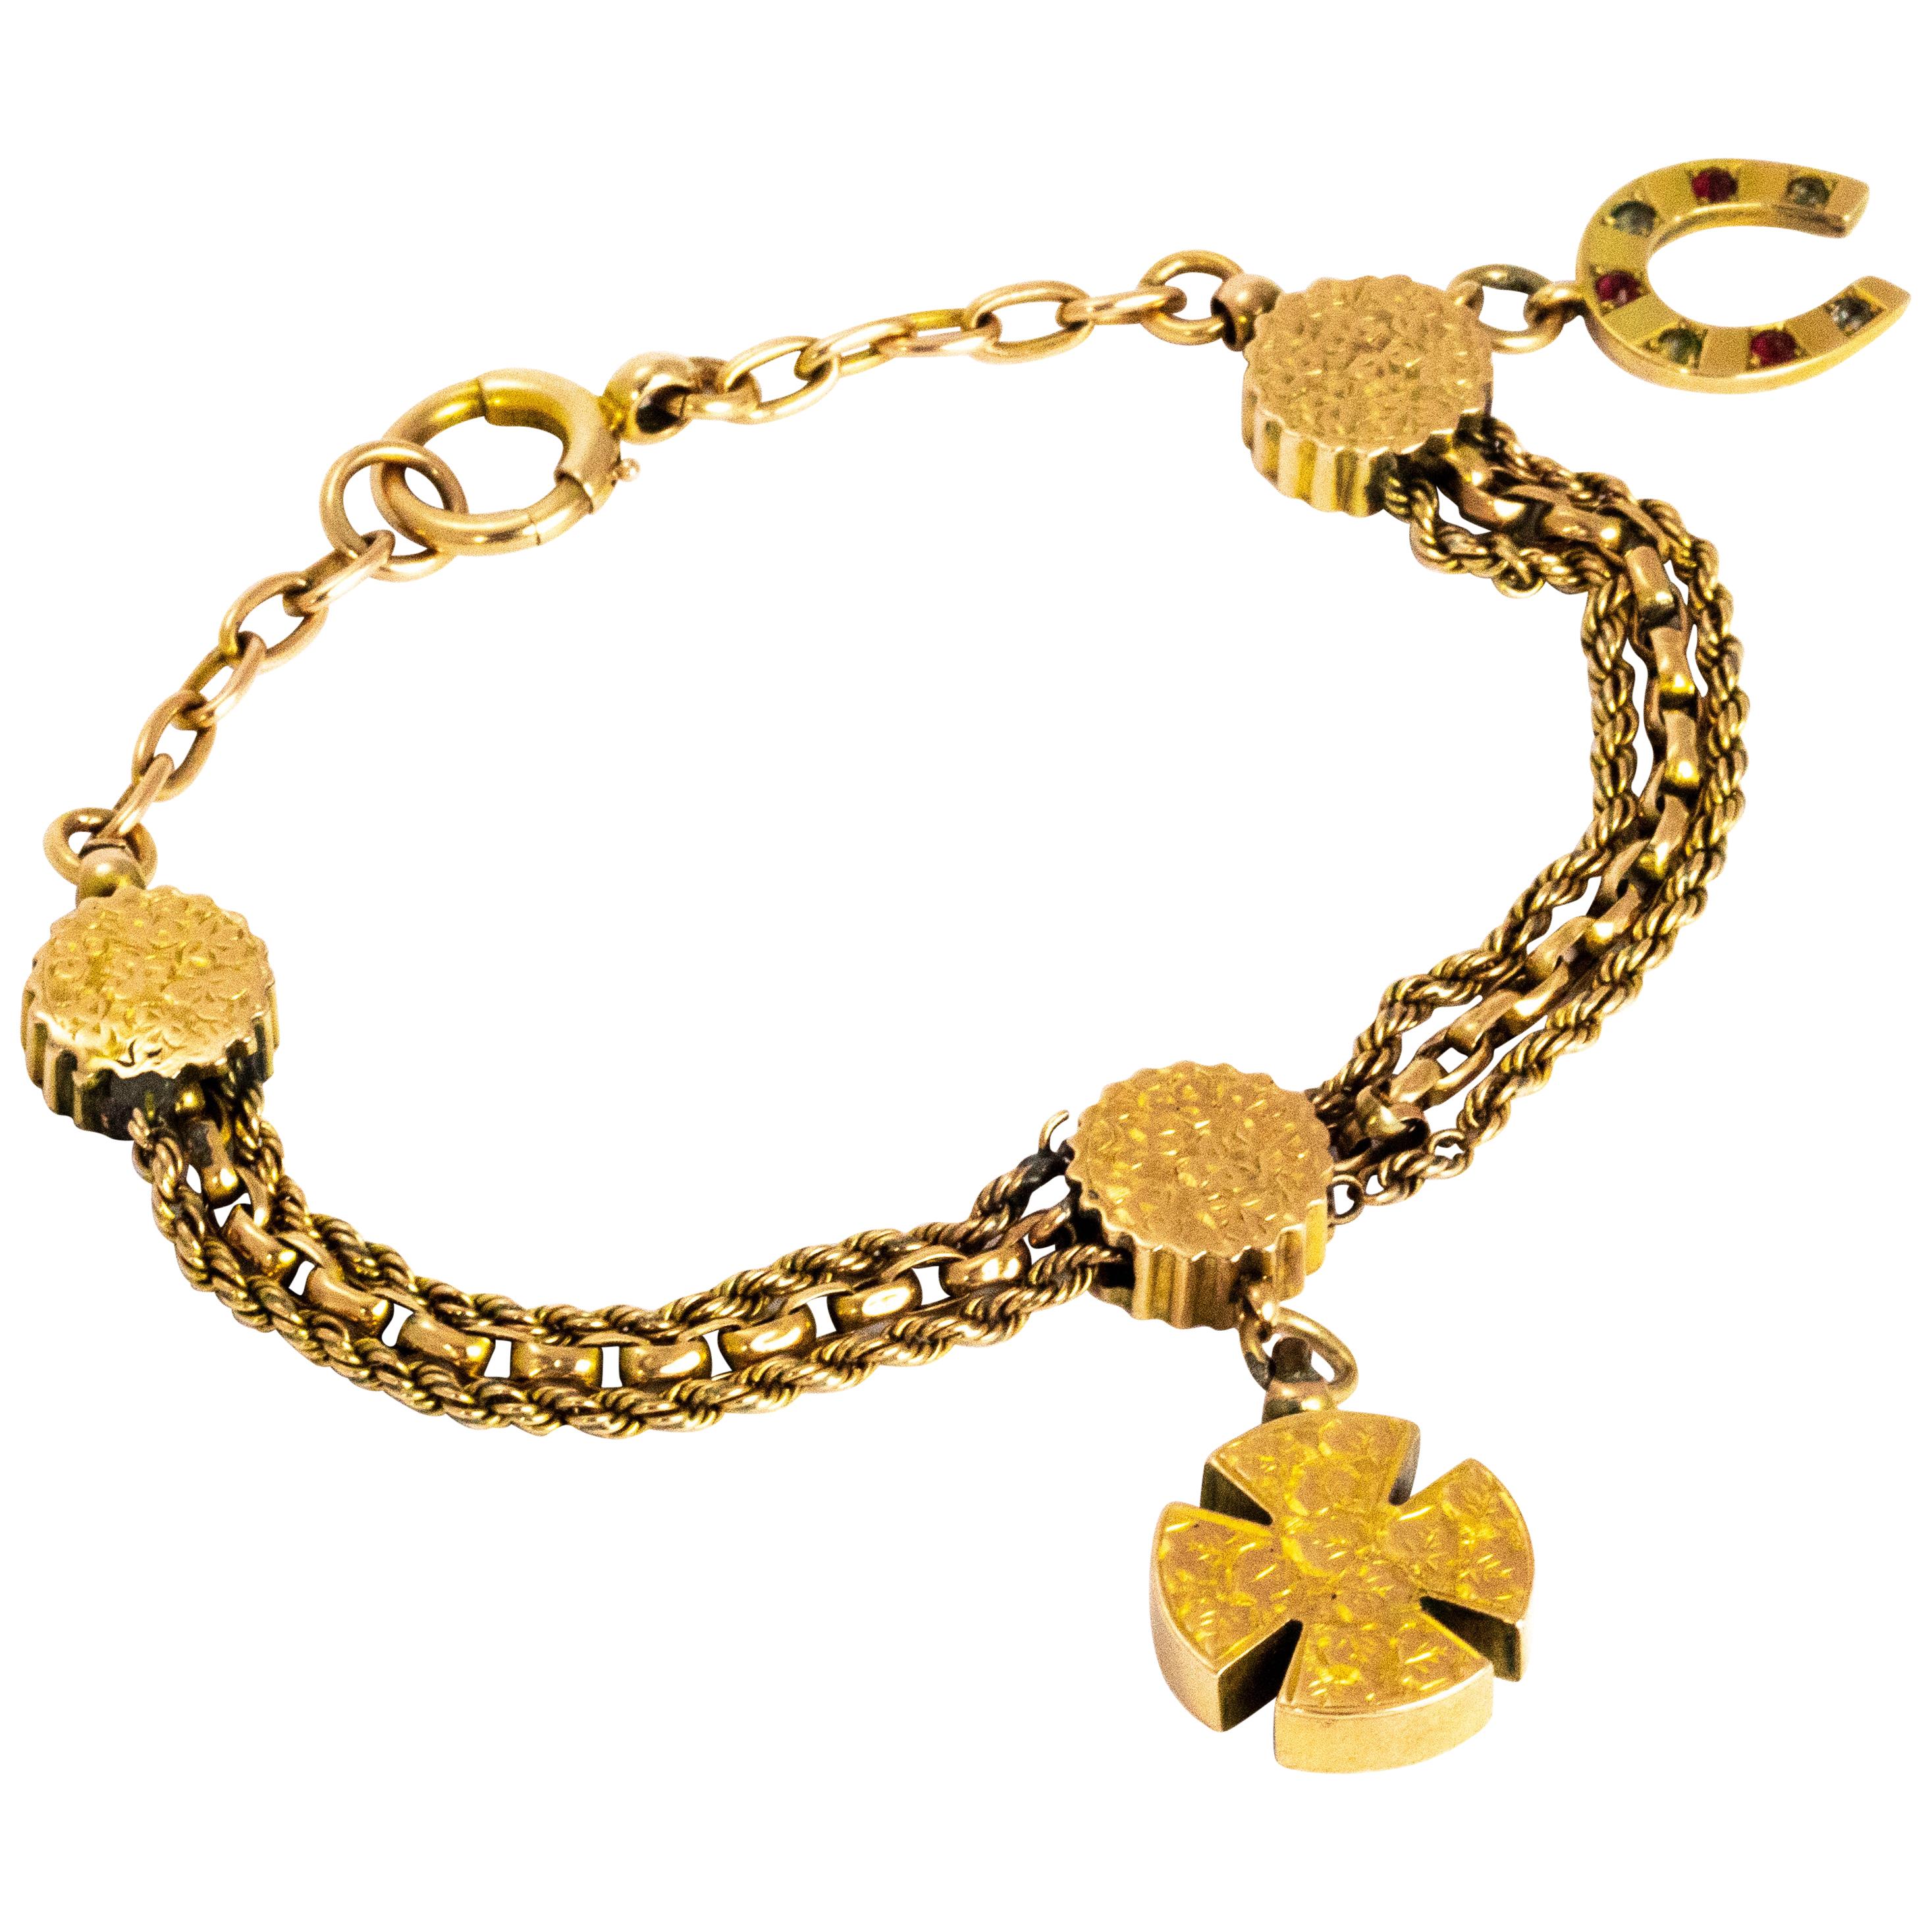 Victorian 9 Carat Gold Albertina Bracelet